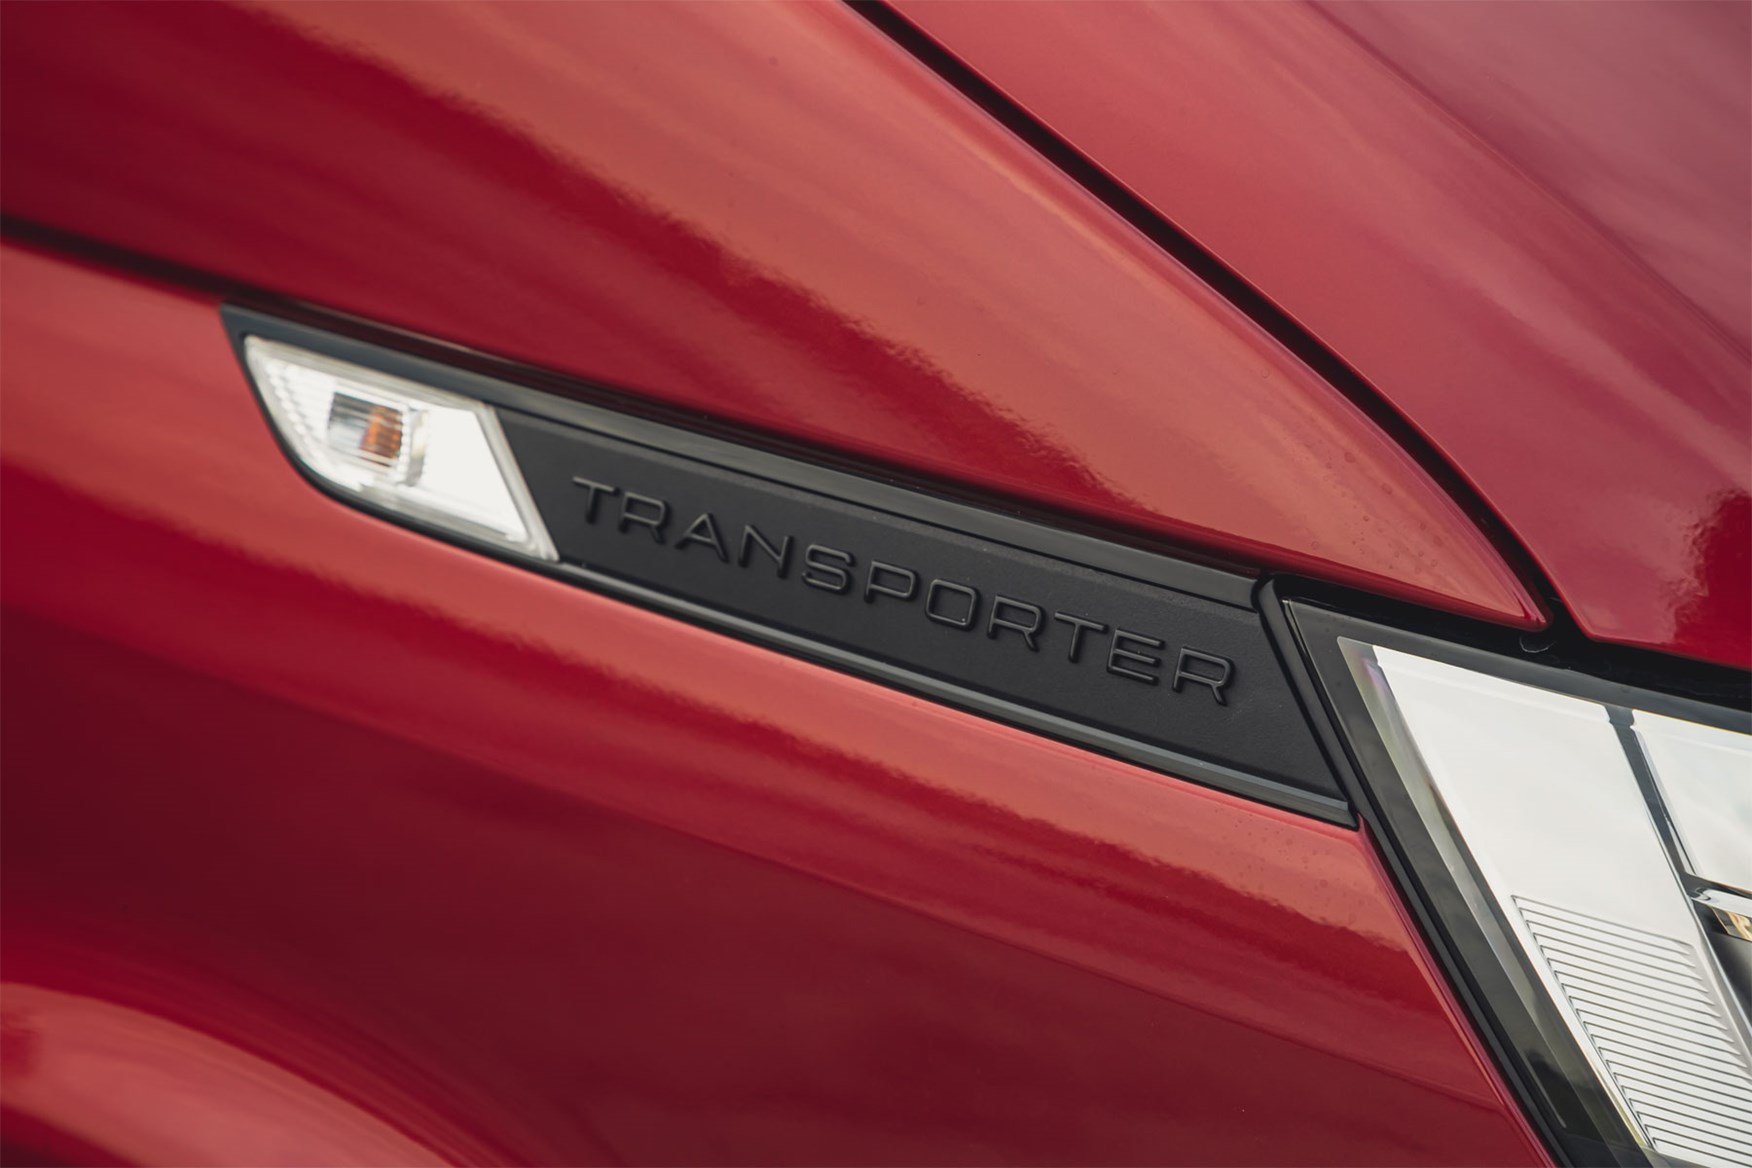 Volkswagen Transporter review, T6.1, 2020, red, front badge